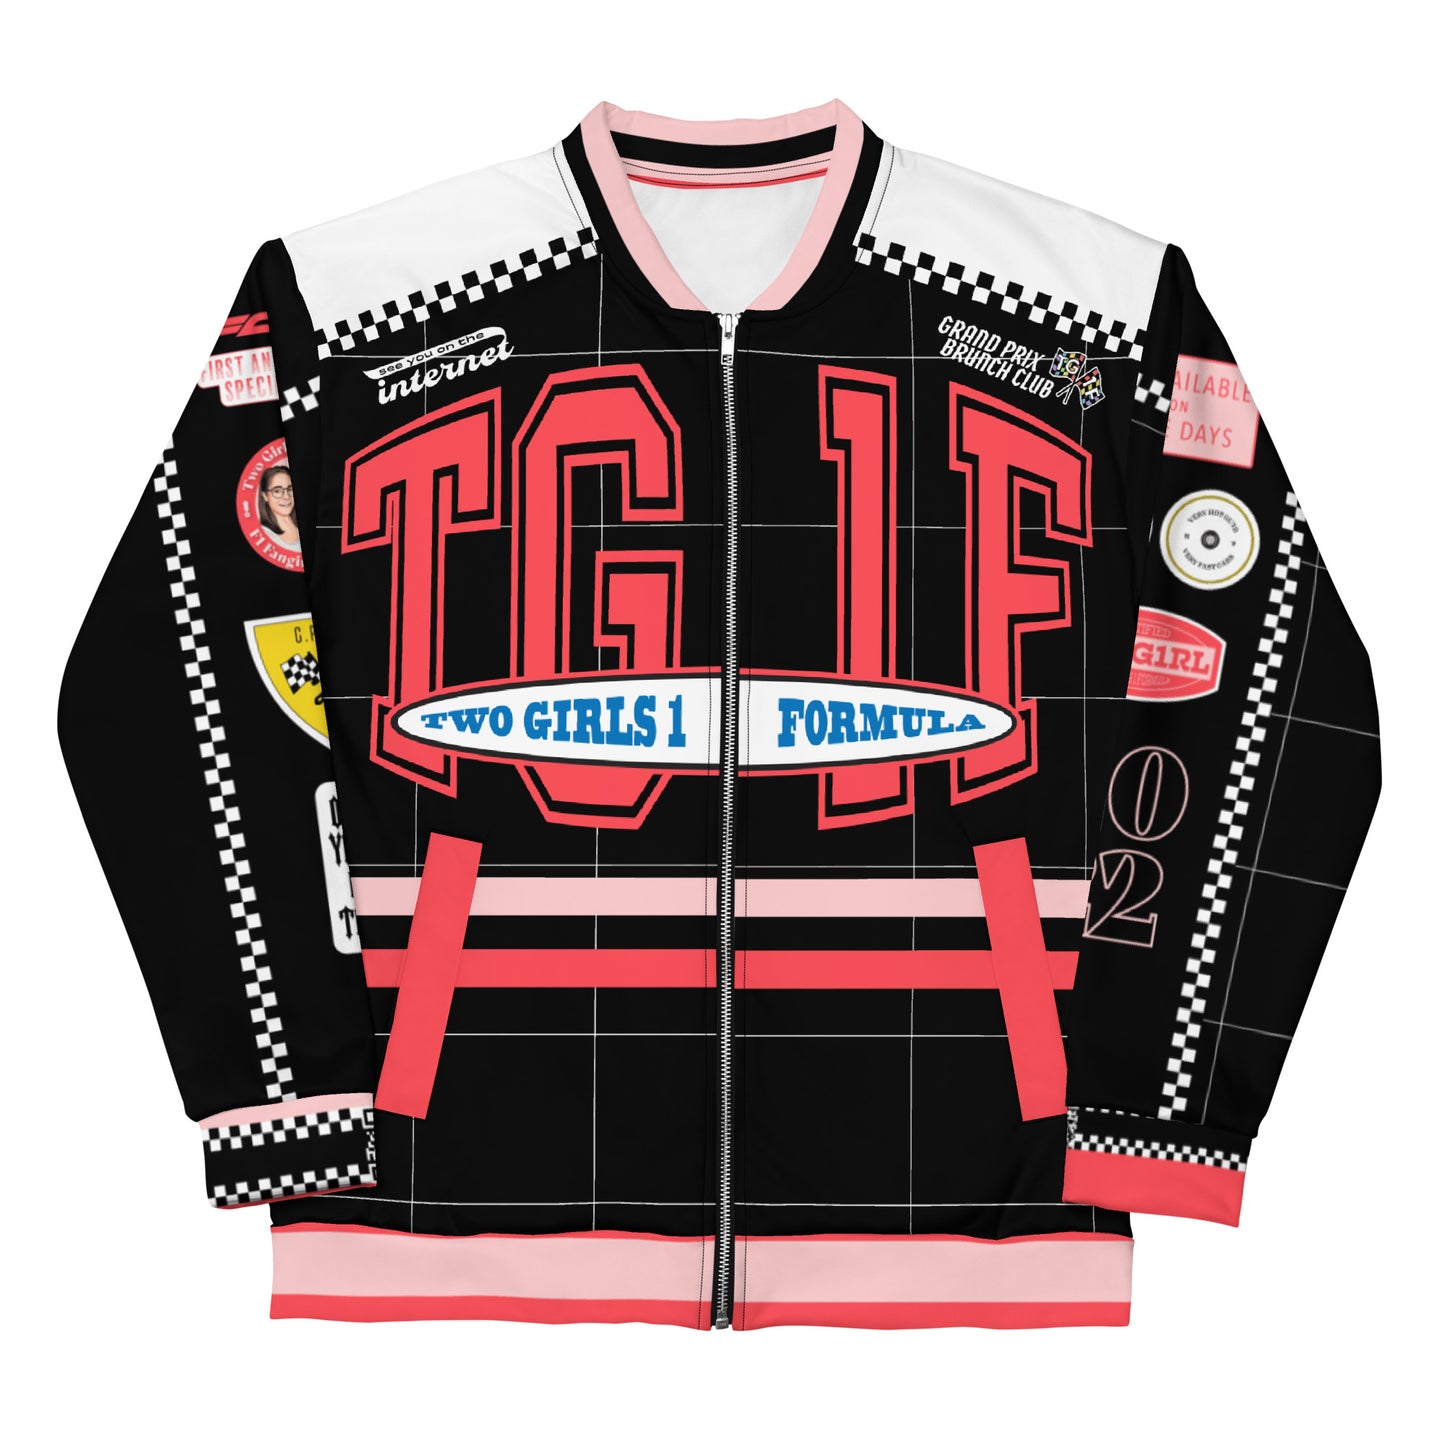 TG1F 1 Year Anniversary Racing Jacket (Dark)